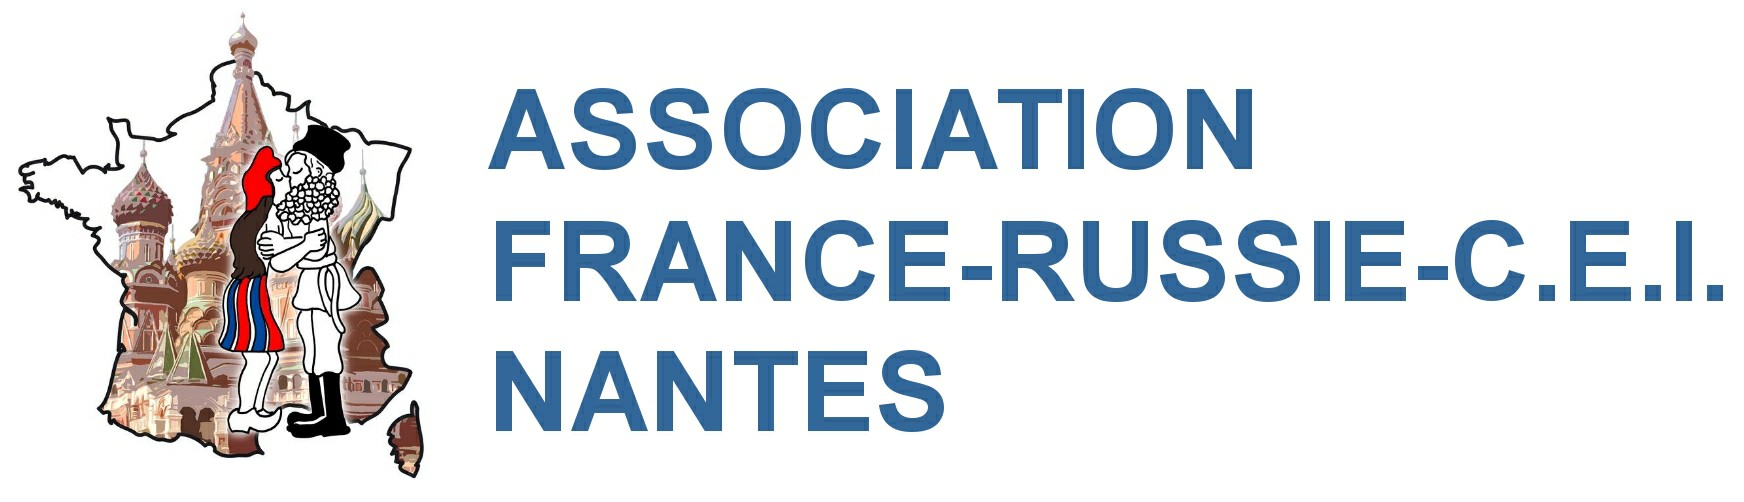 Association France - Russie - CEI